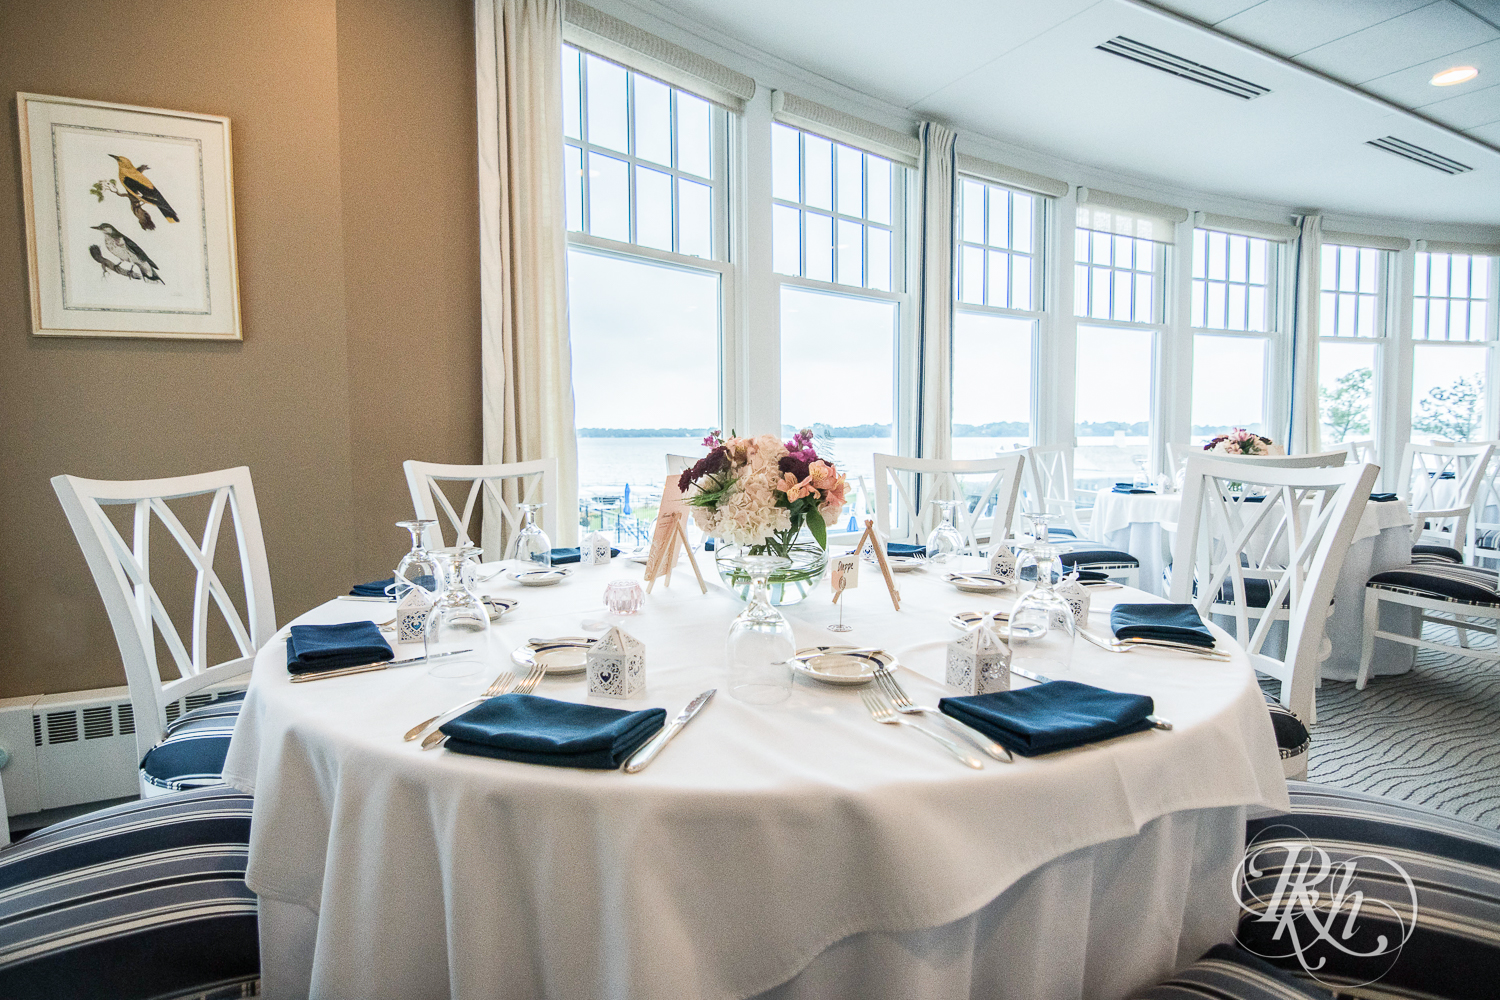 Wedding reception setup at White Bear Yacht Club in White Bear Lake, Minnesota.